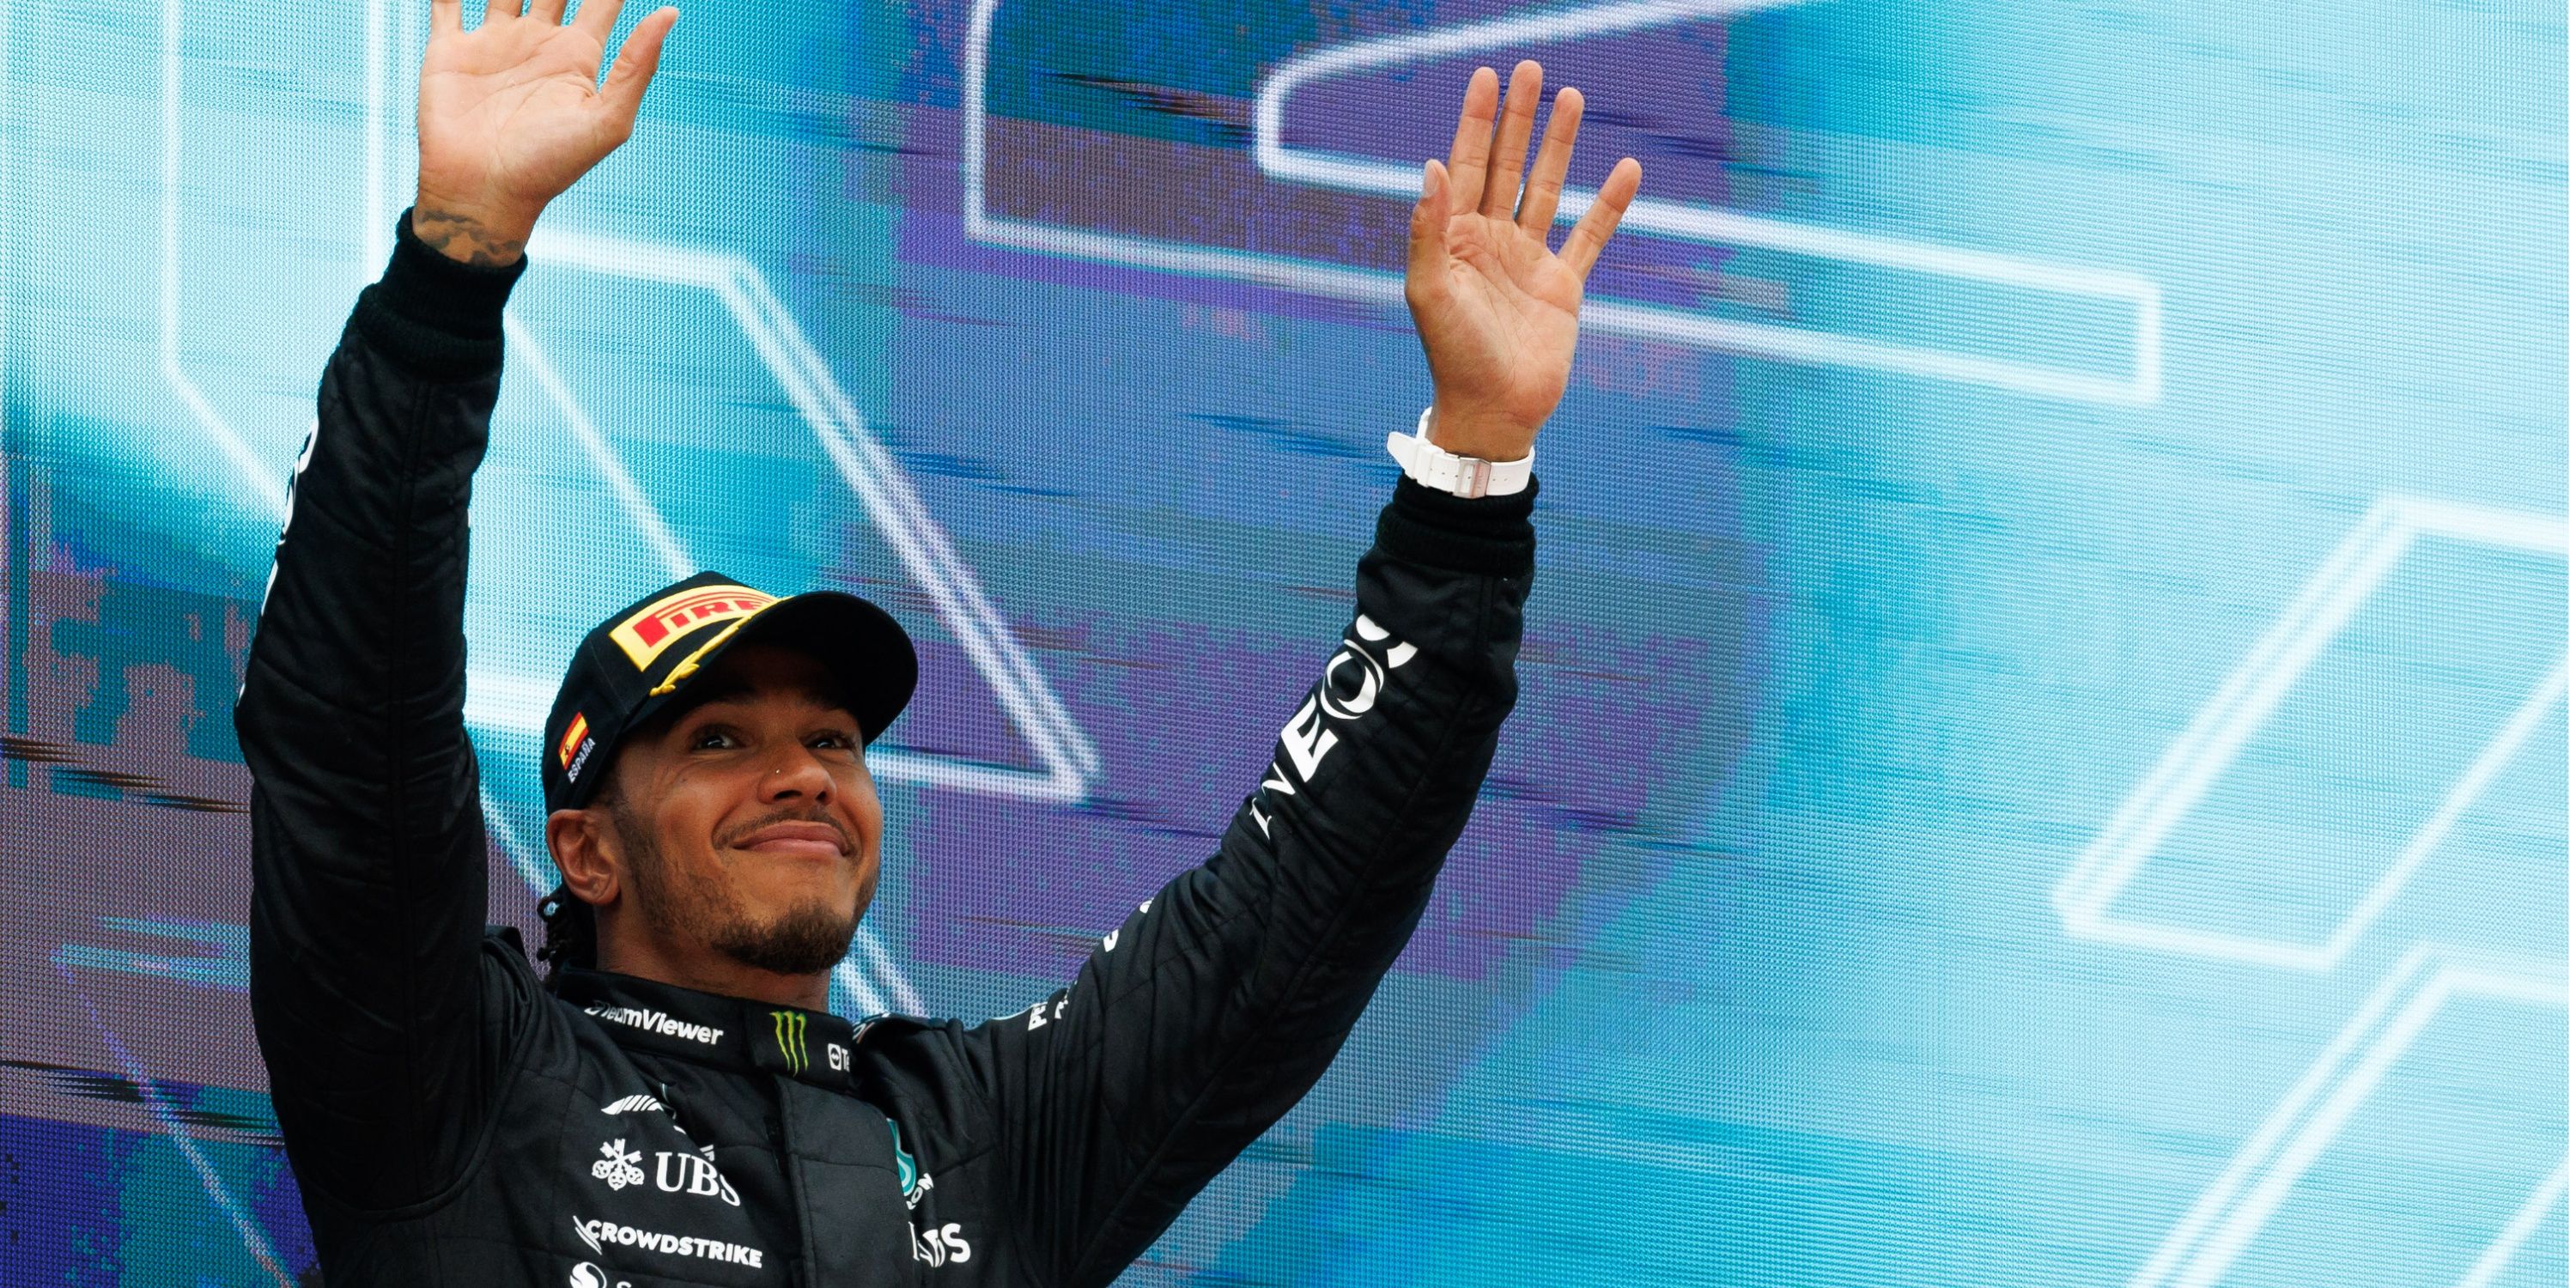 Lewis Hamilton at the Spanish Grand Prix on the podium